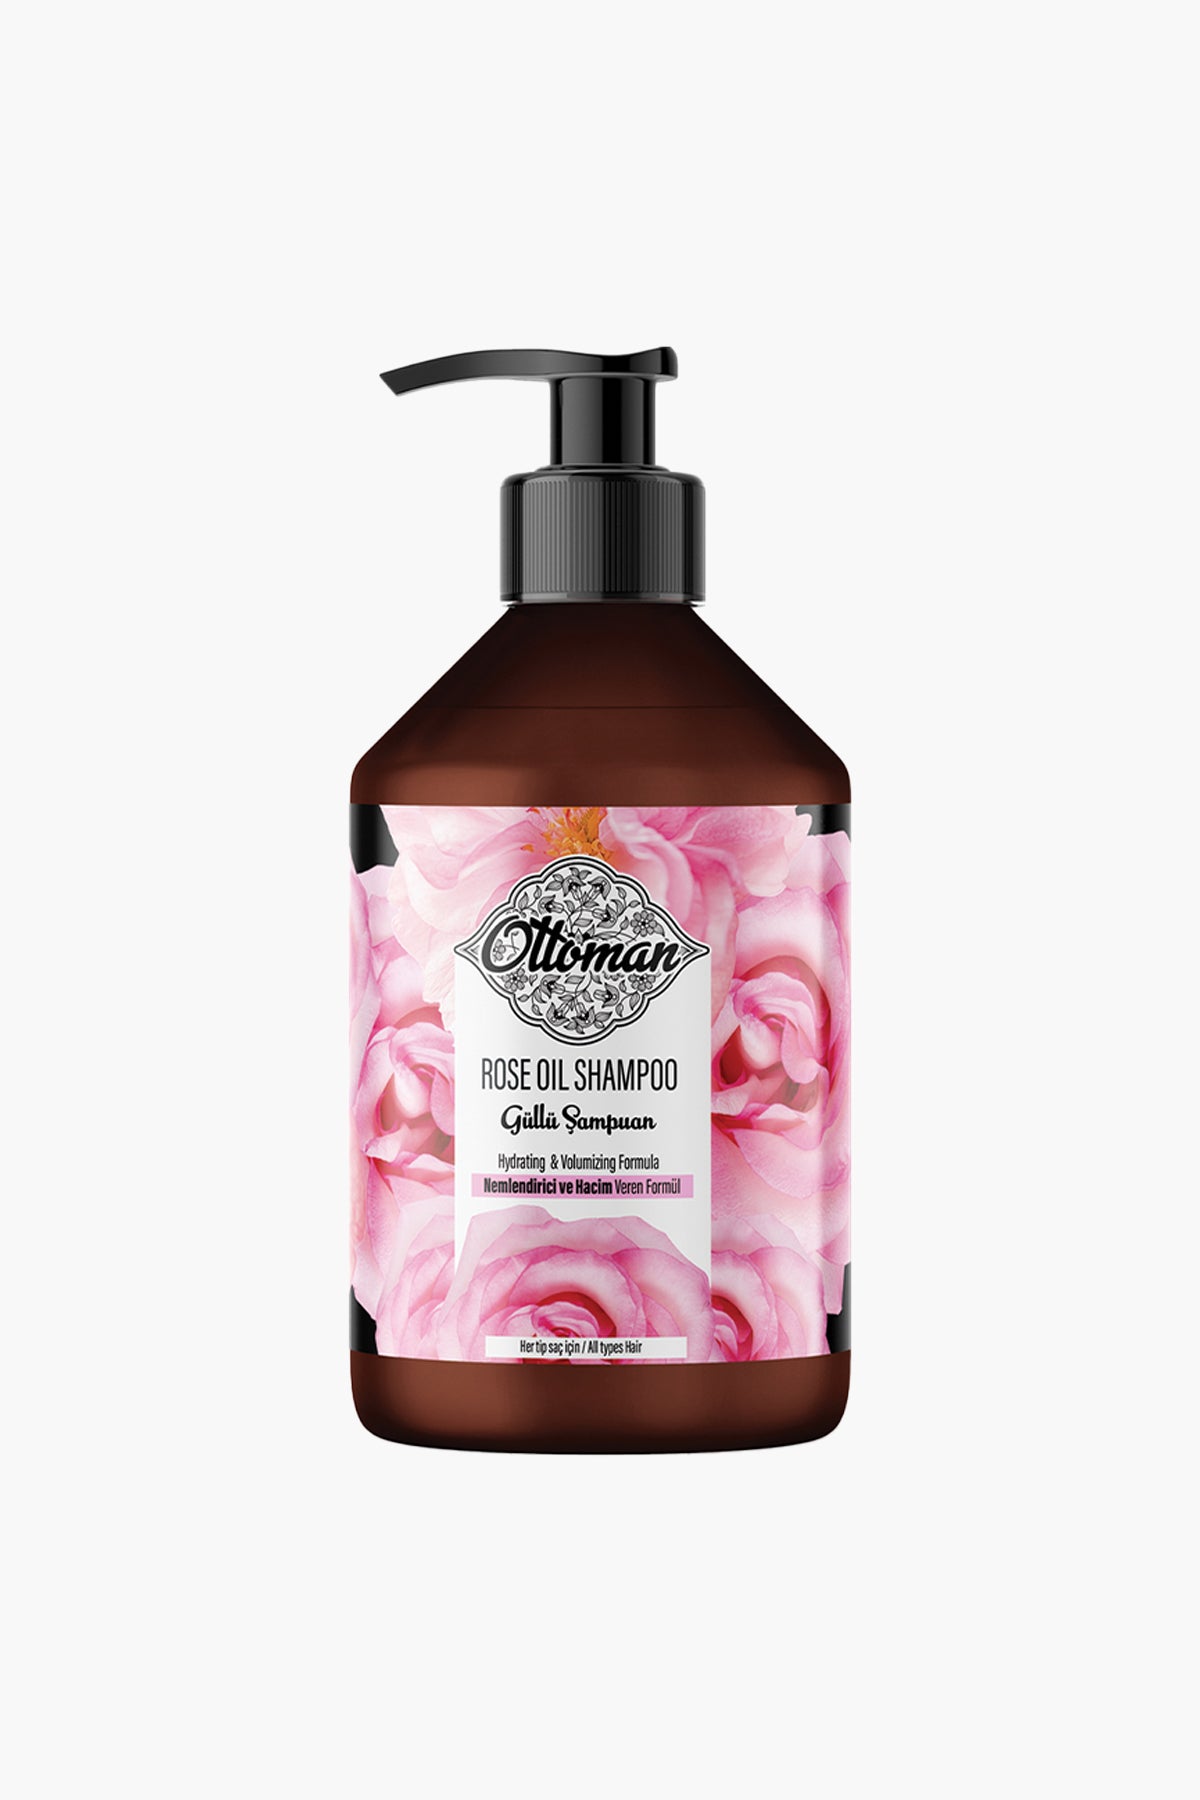 Ottoman Rose Oil Shampoo 500 ml -  Dr.Clinic